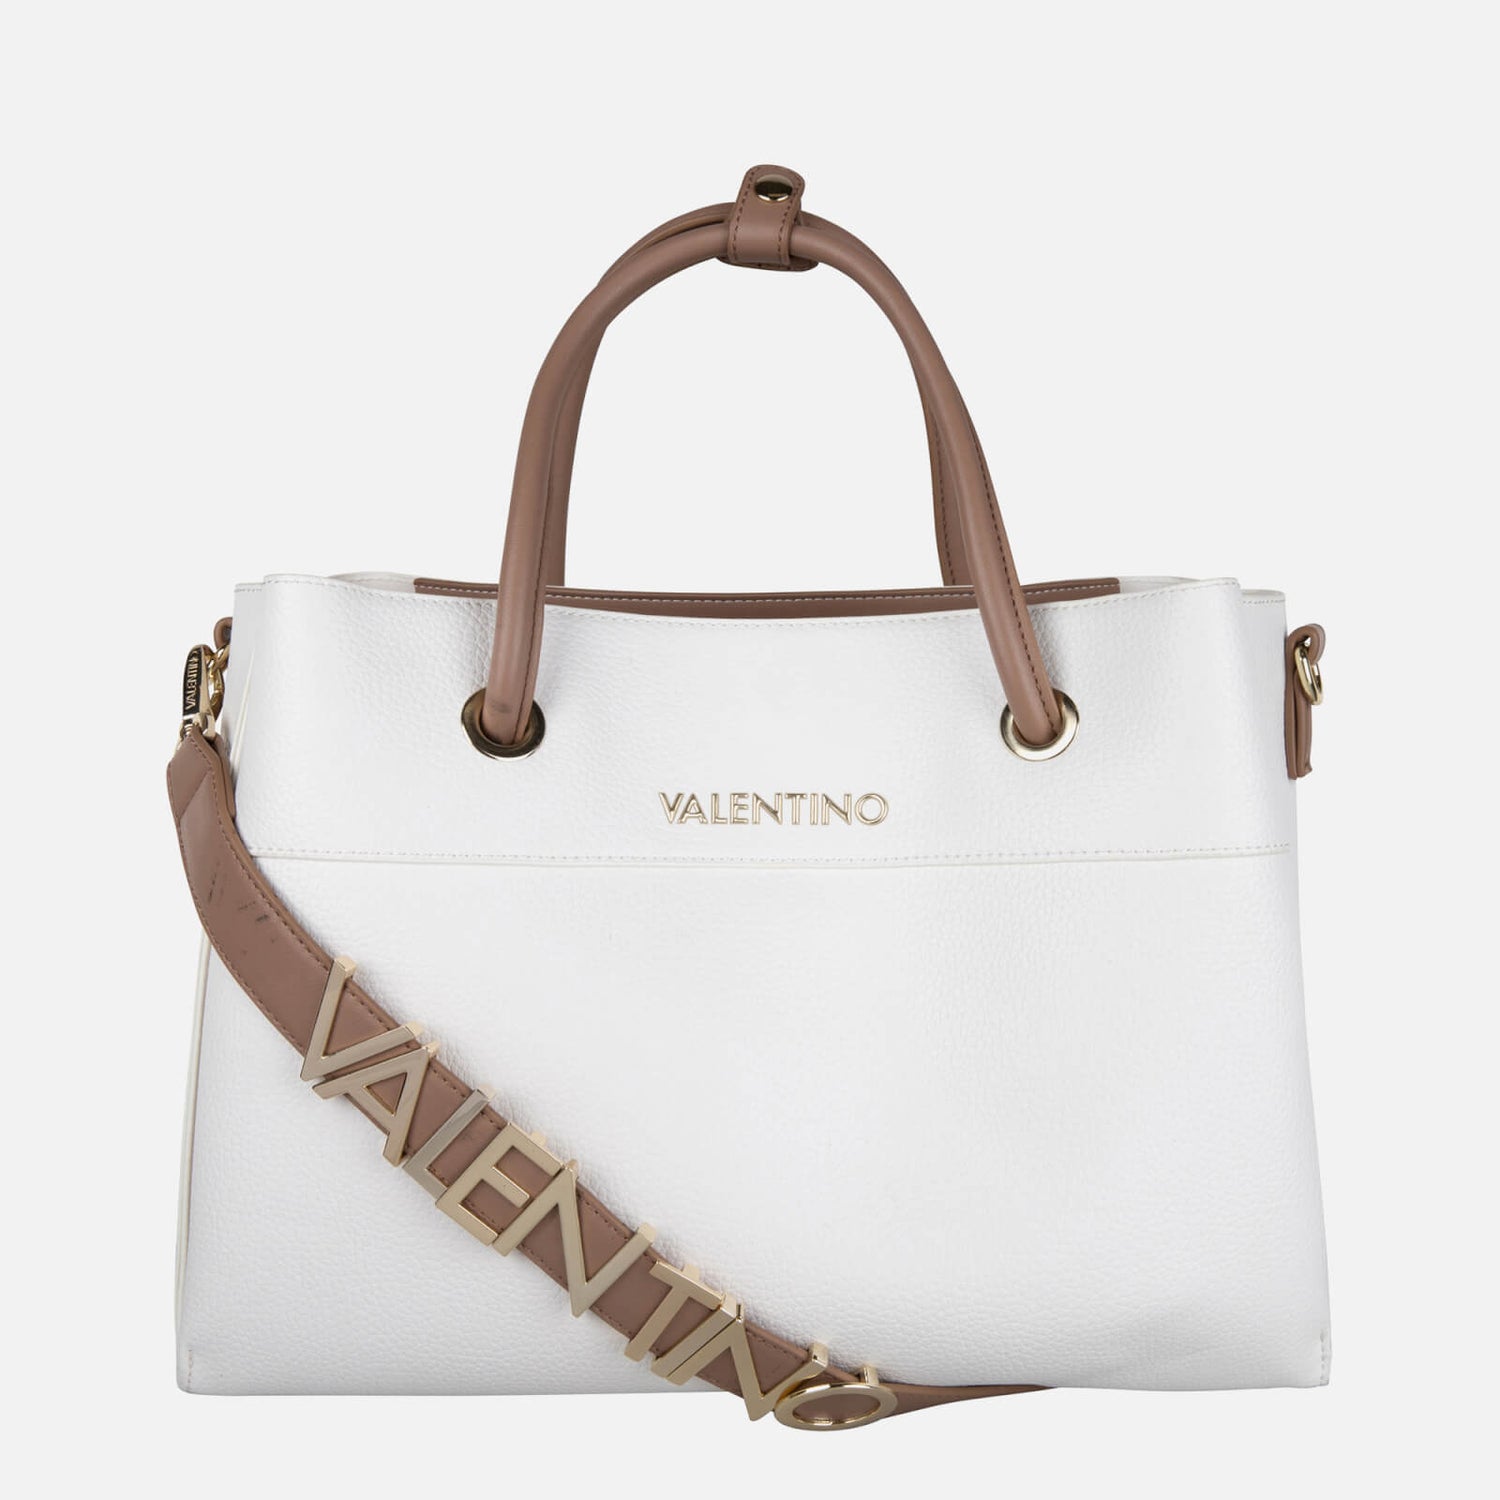 Valentino Bags Alexia Ladies Shoulder Bag in Black